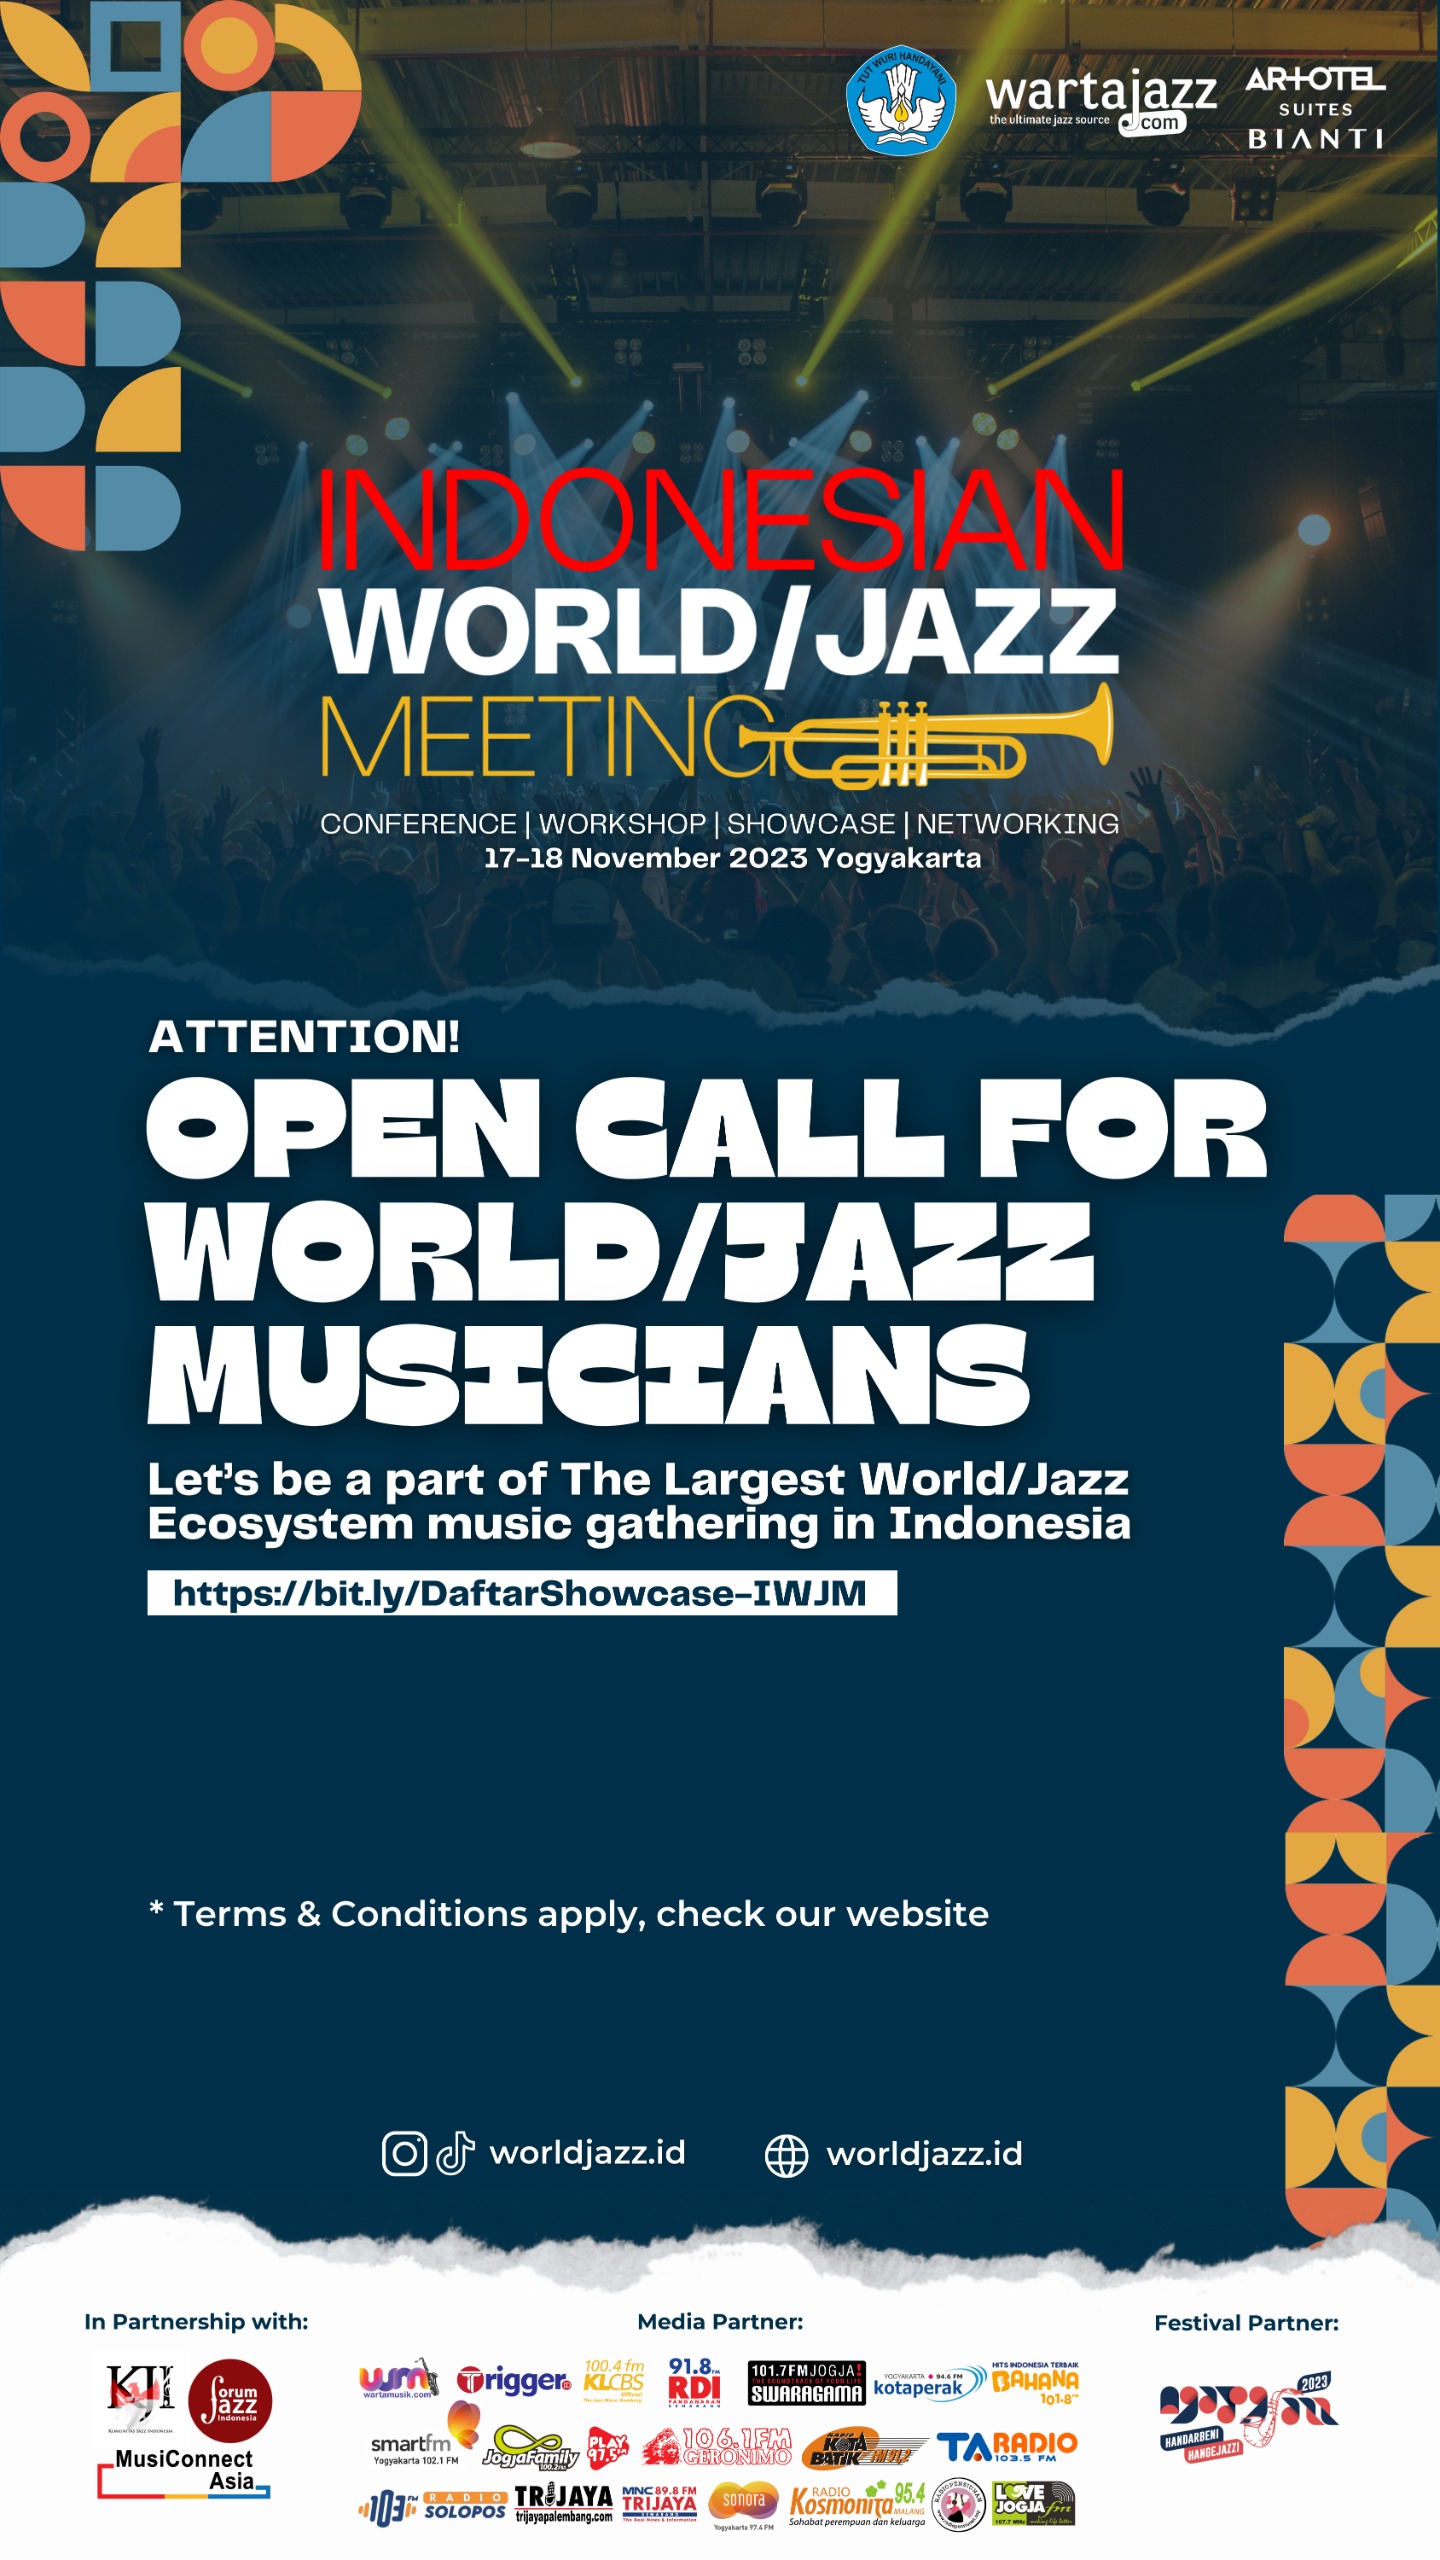 Indonesian World/Jazz Meeting 2023, Ajang Workshop dan Jejaring   Pelaku World/Jazz Indonesia